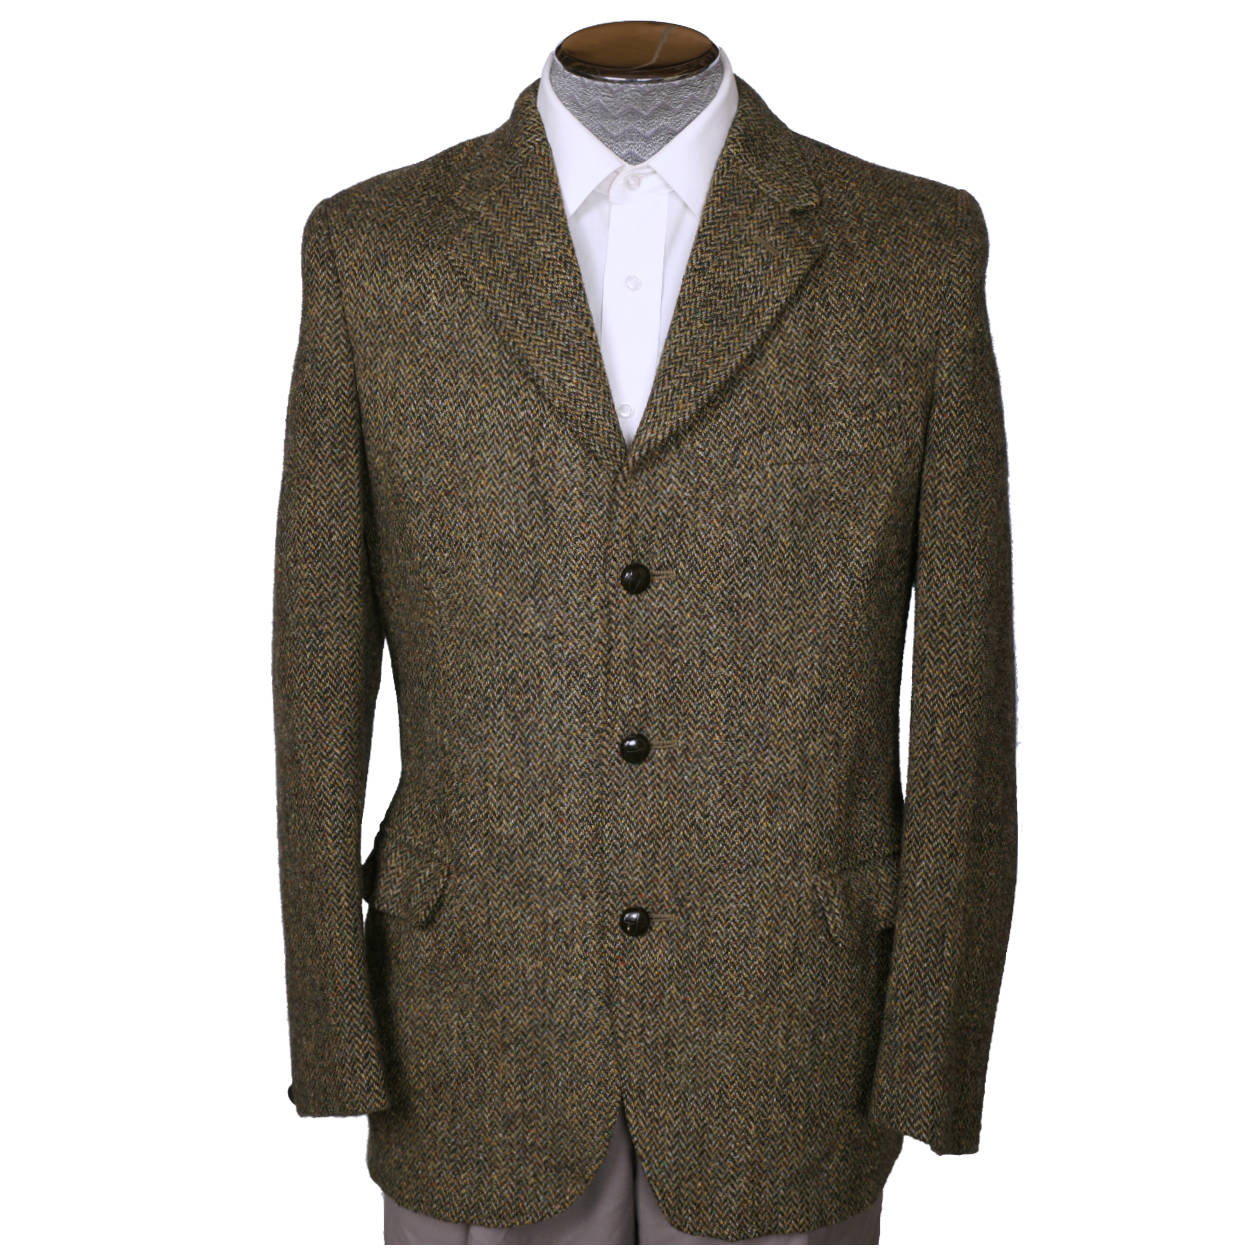 Vintage 1960s Harris Tweed Mens Jacket Dunn and Co Britain Sport Coat - M